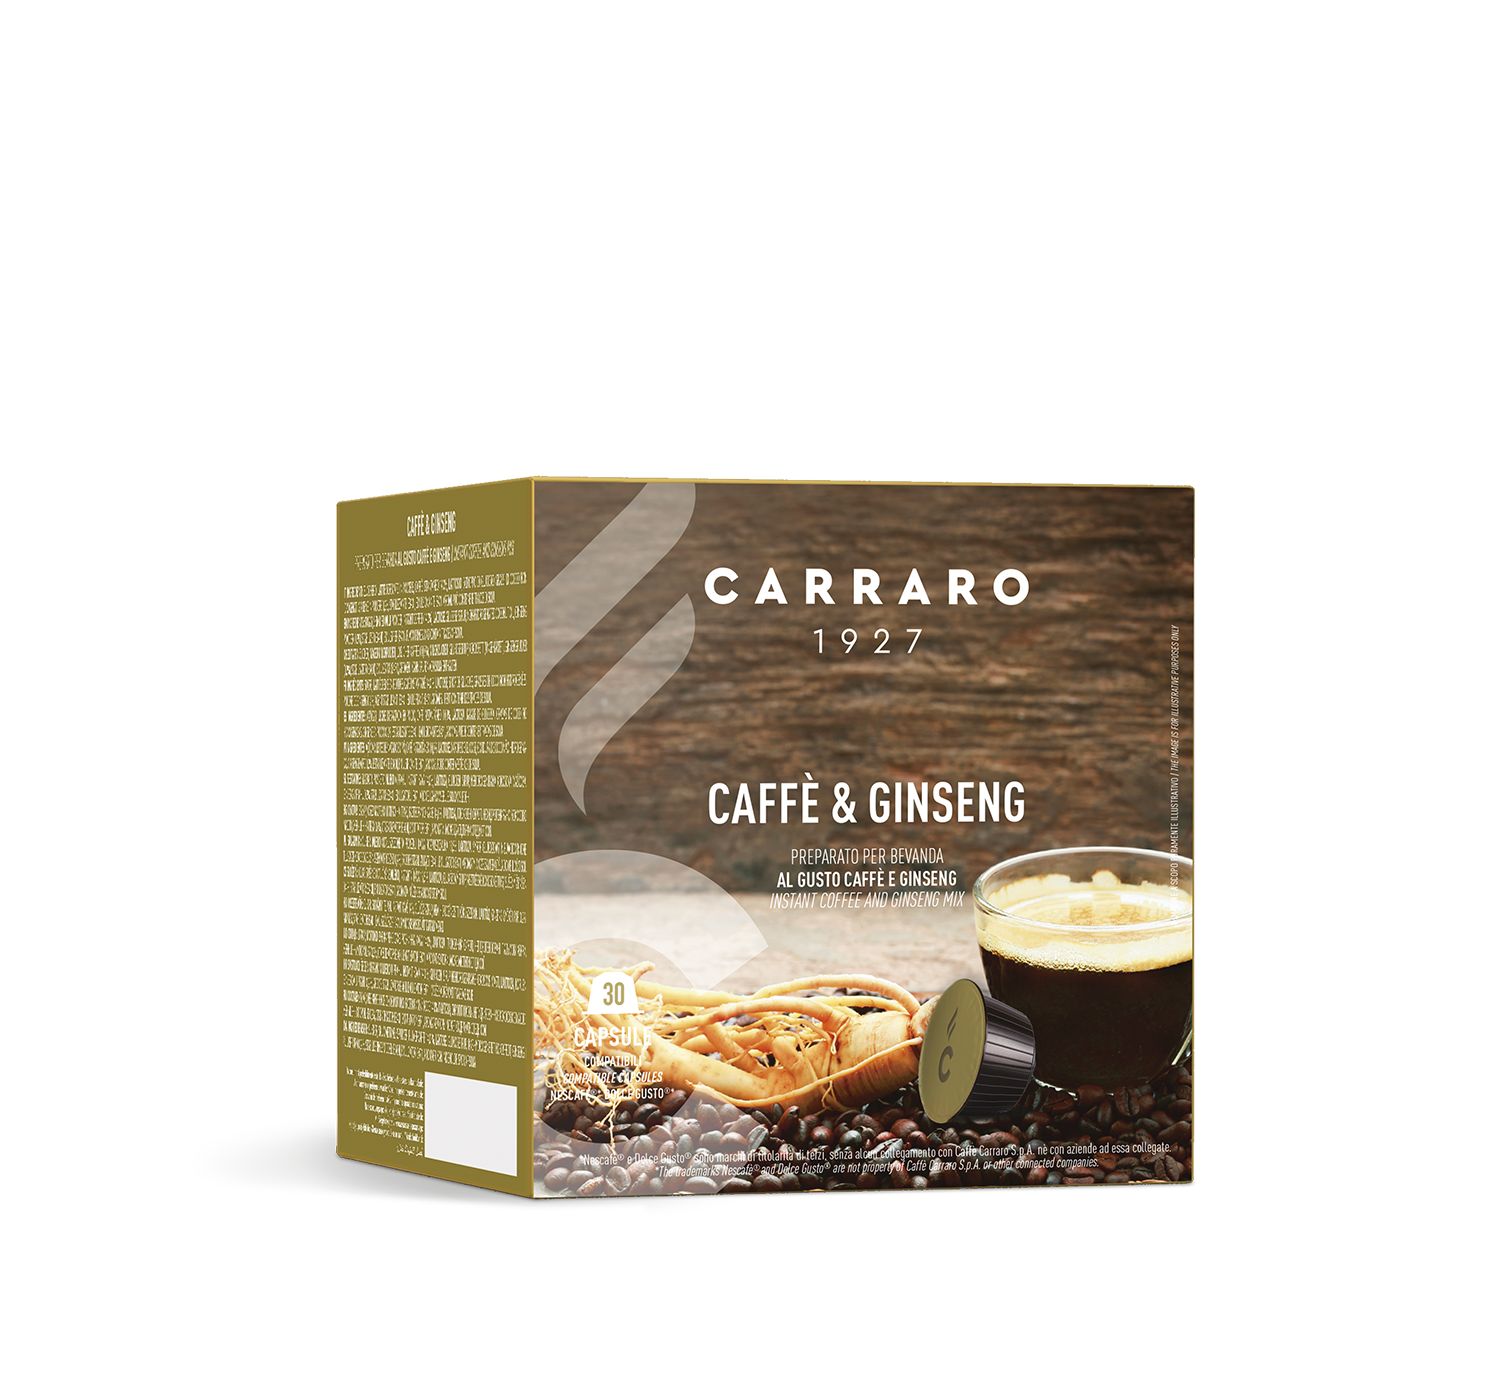 Casa - Caffè&Ginseng – 30 capsule compatibili Dolce Gusto®* - Shop online Caffè Carraro